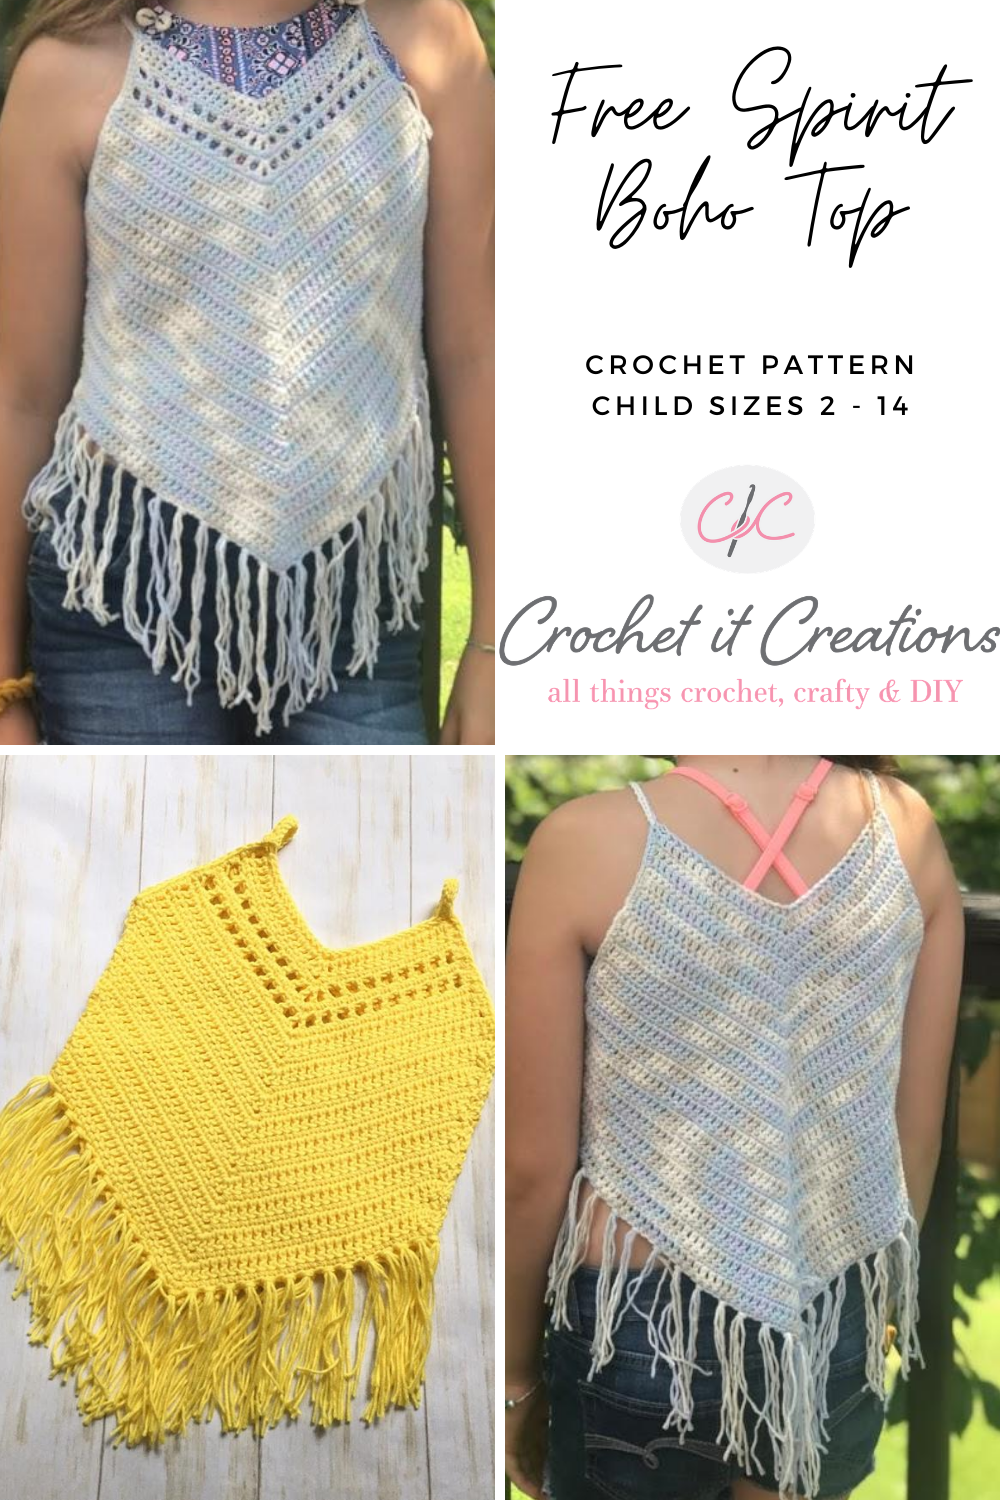 Free Spirit Boho Top Crochet Pattern - Crochet It Creations